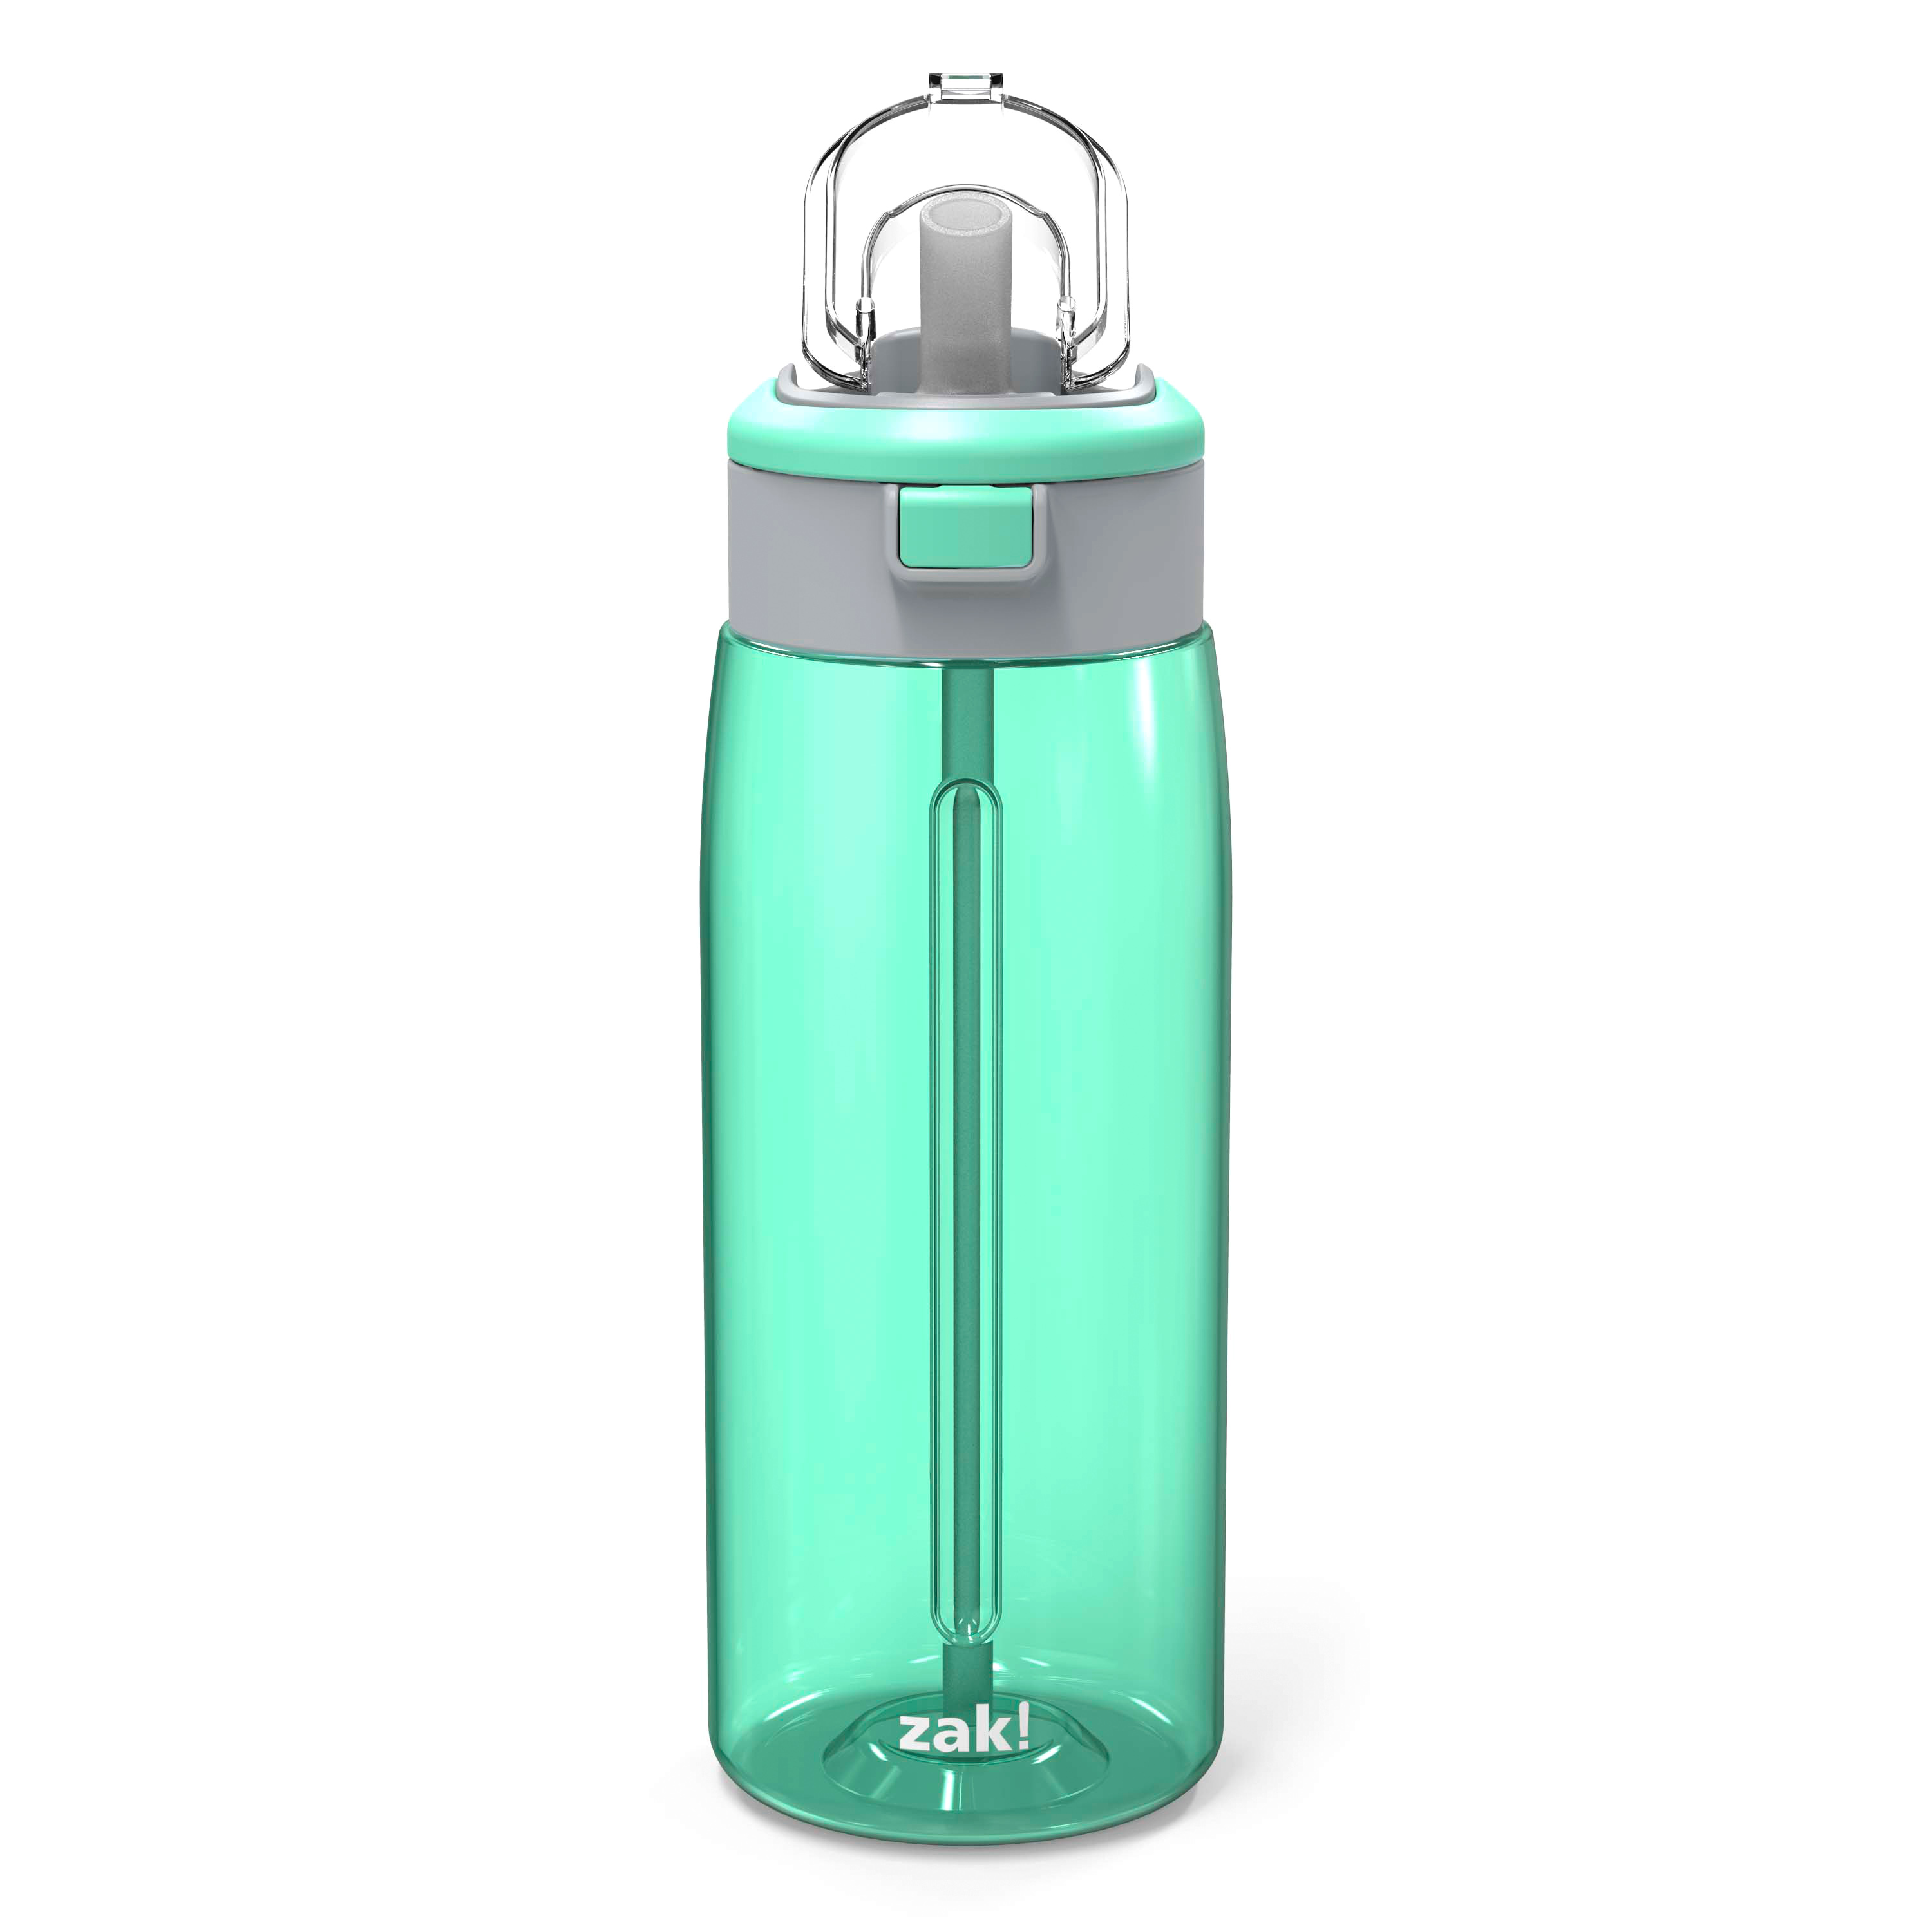 Genesis 32 ounce Reusable Plastic Water Bottle with Interchangeable Spouts, Neo Mint slideshow image 10